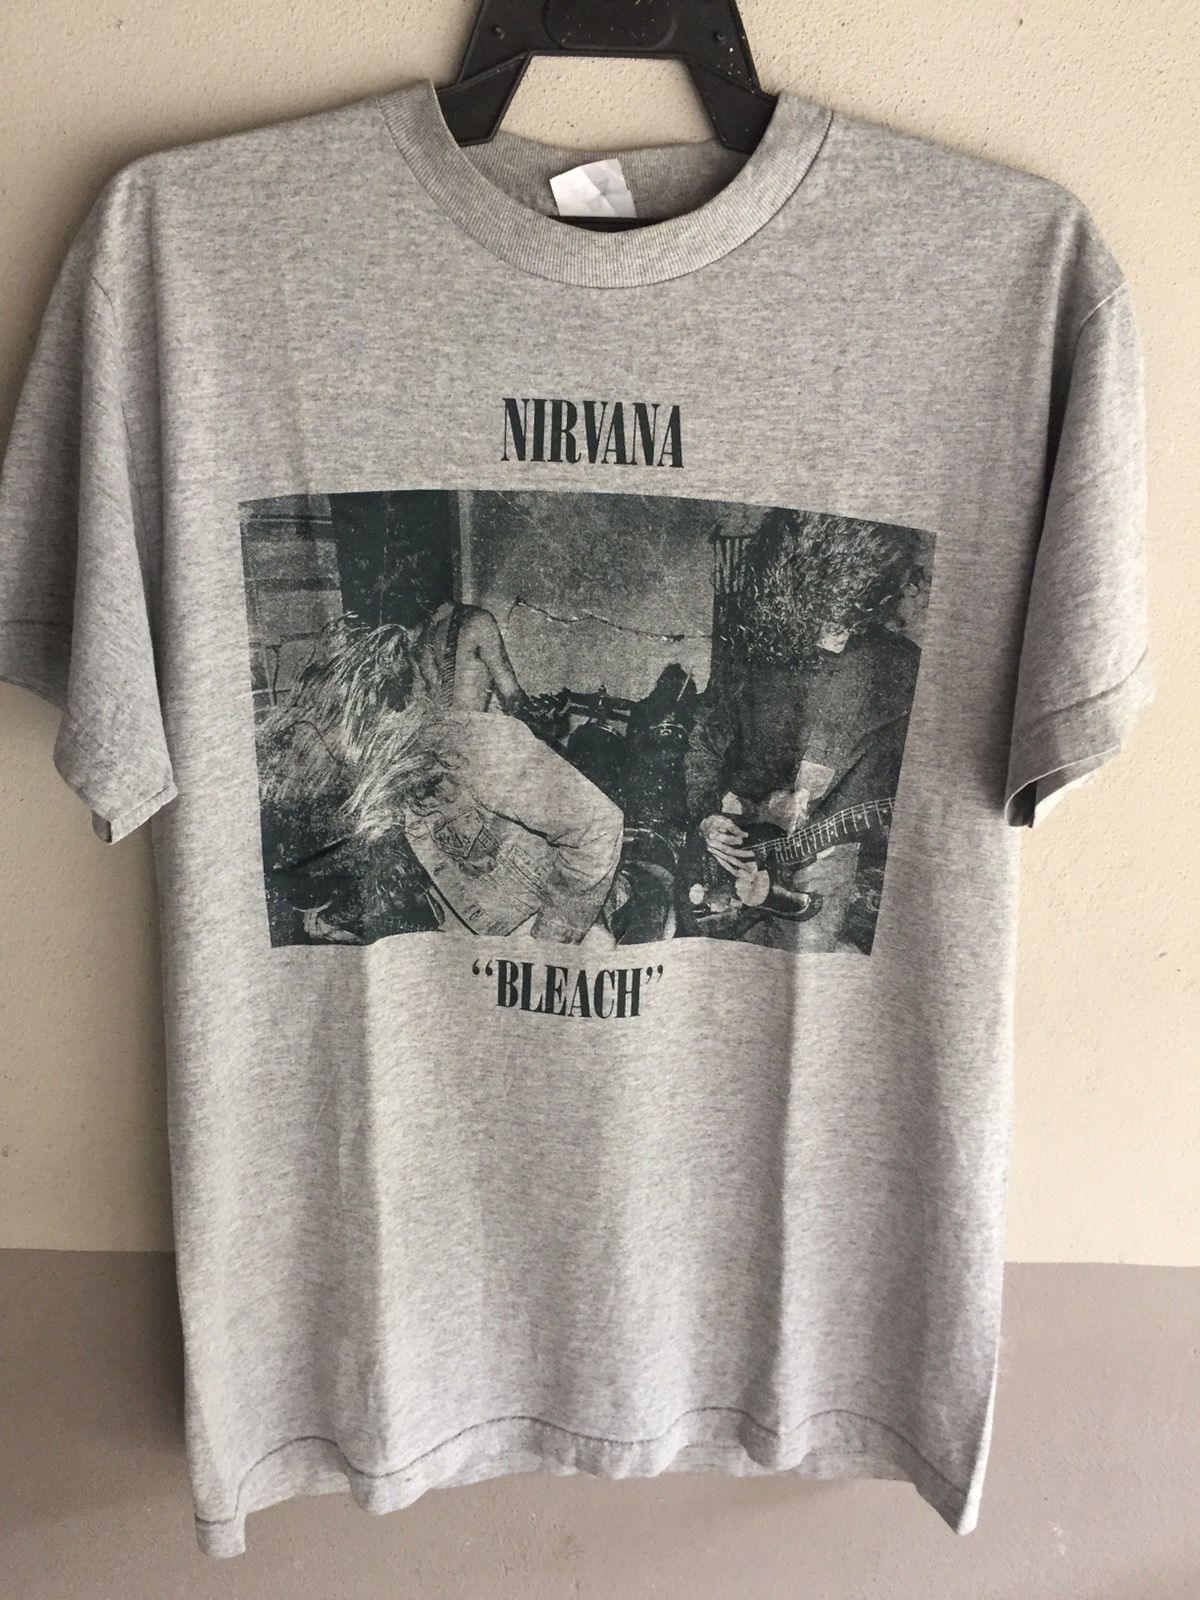 NIRVANA BLEACH Tシャツ SUBPOP サイズLラップT